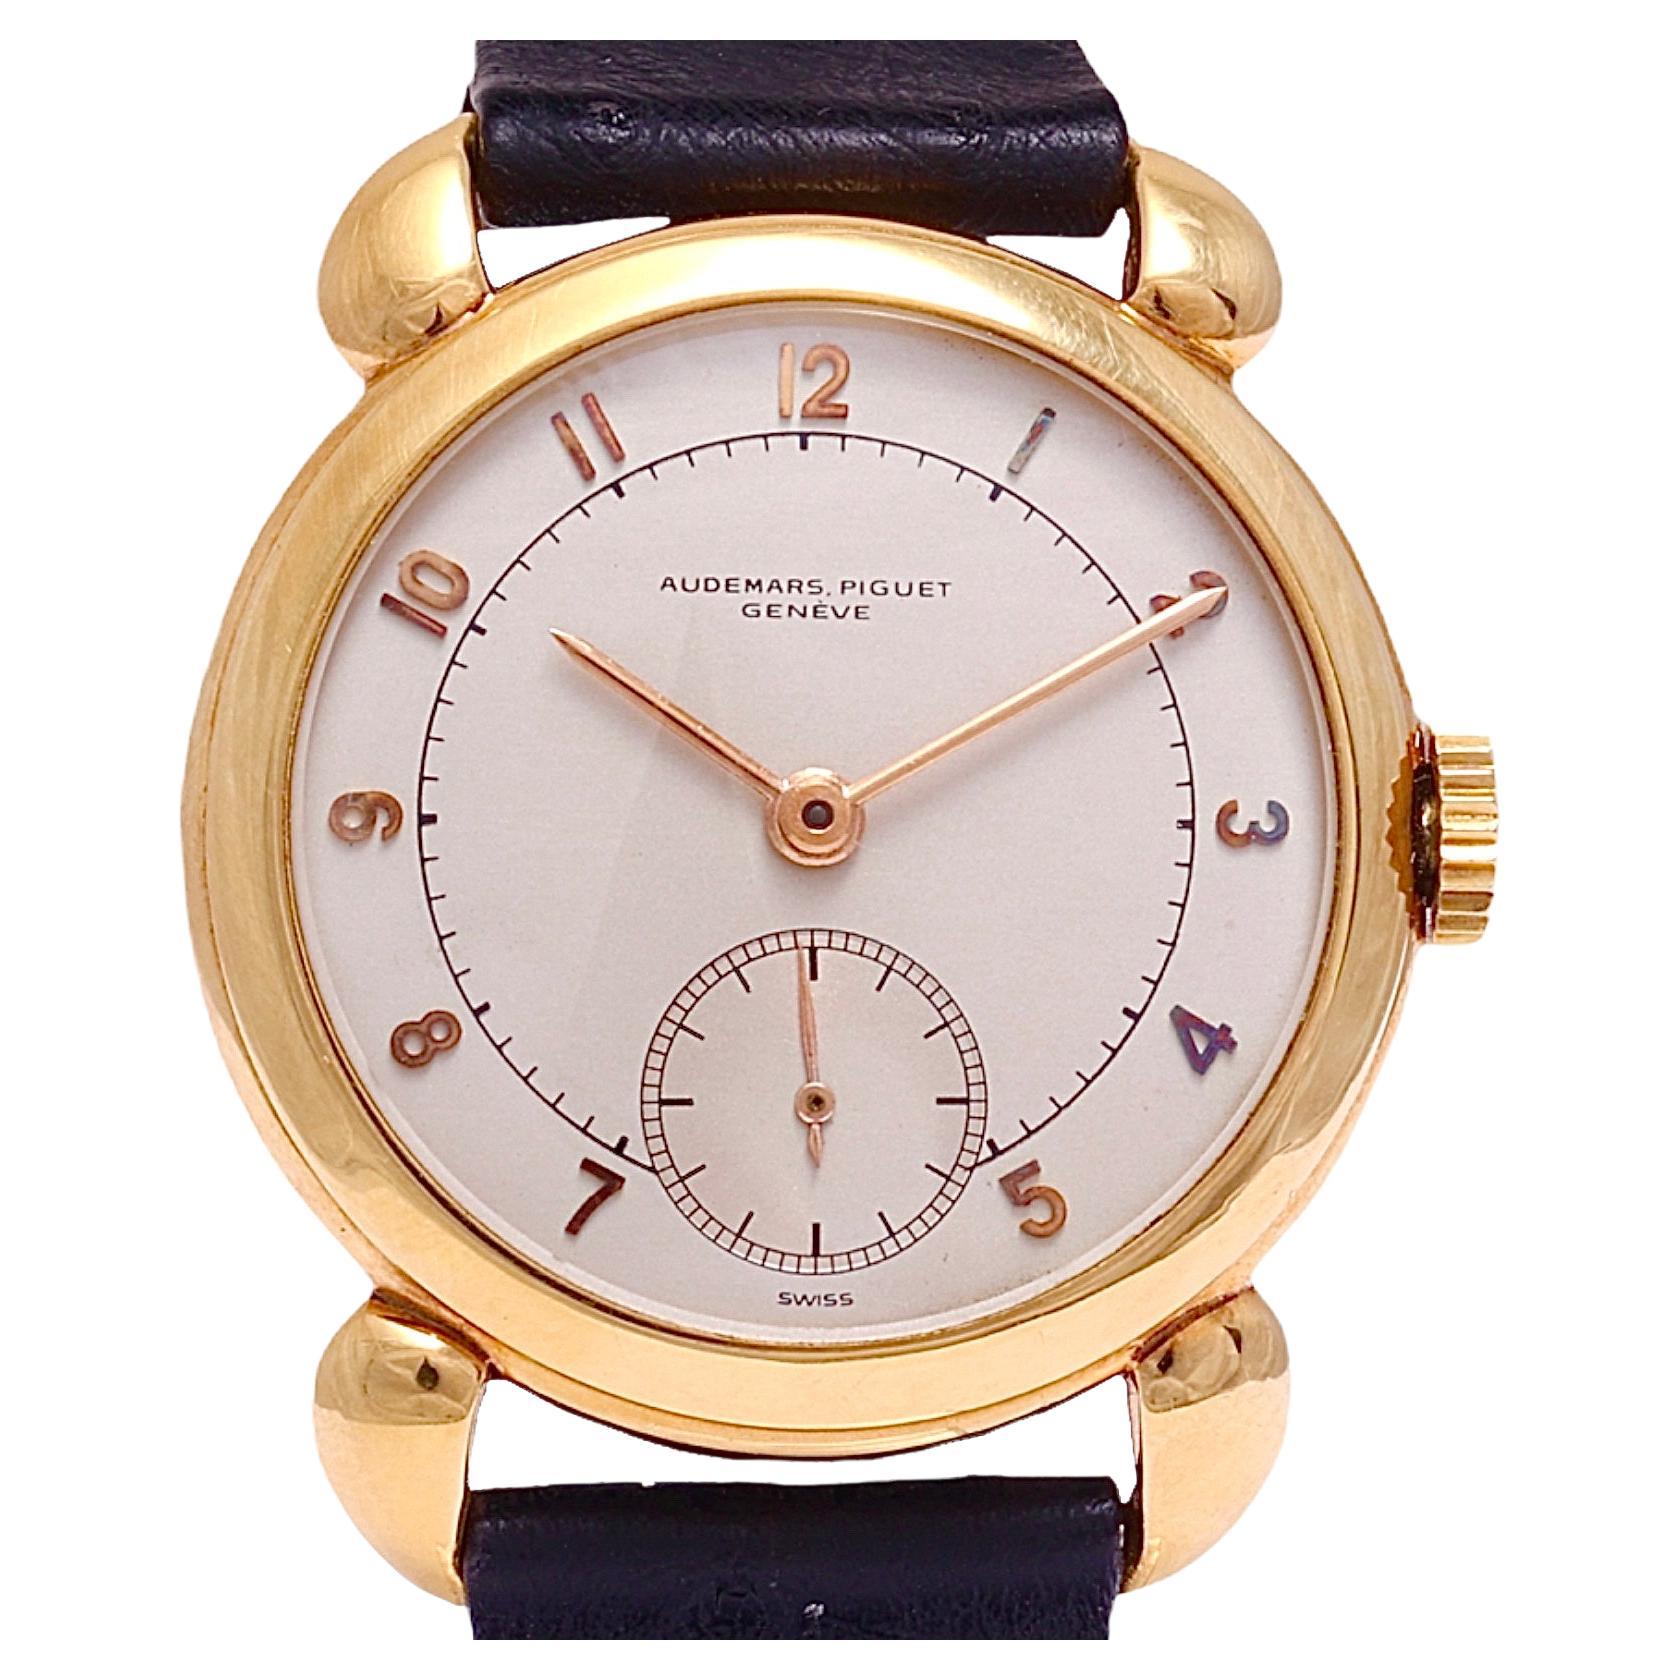 18 Karat Gold Audemars Piguet Calatrava Vintage Seltene Sammler-Armbanduhr 1940er Jahre im Angebot